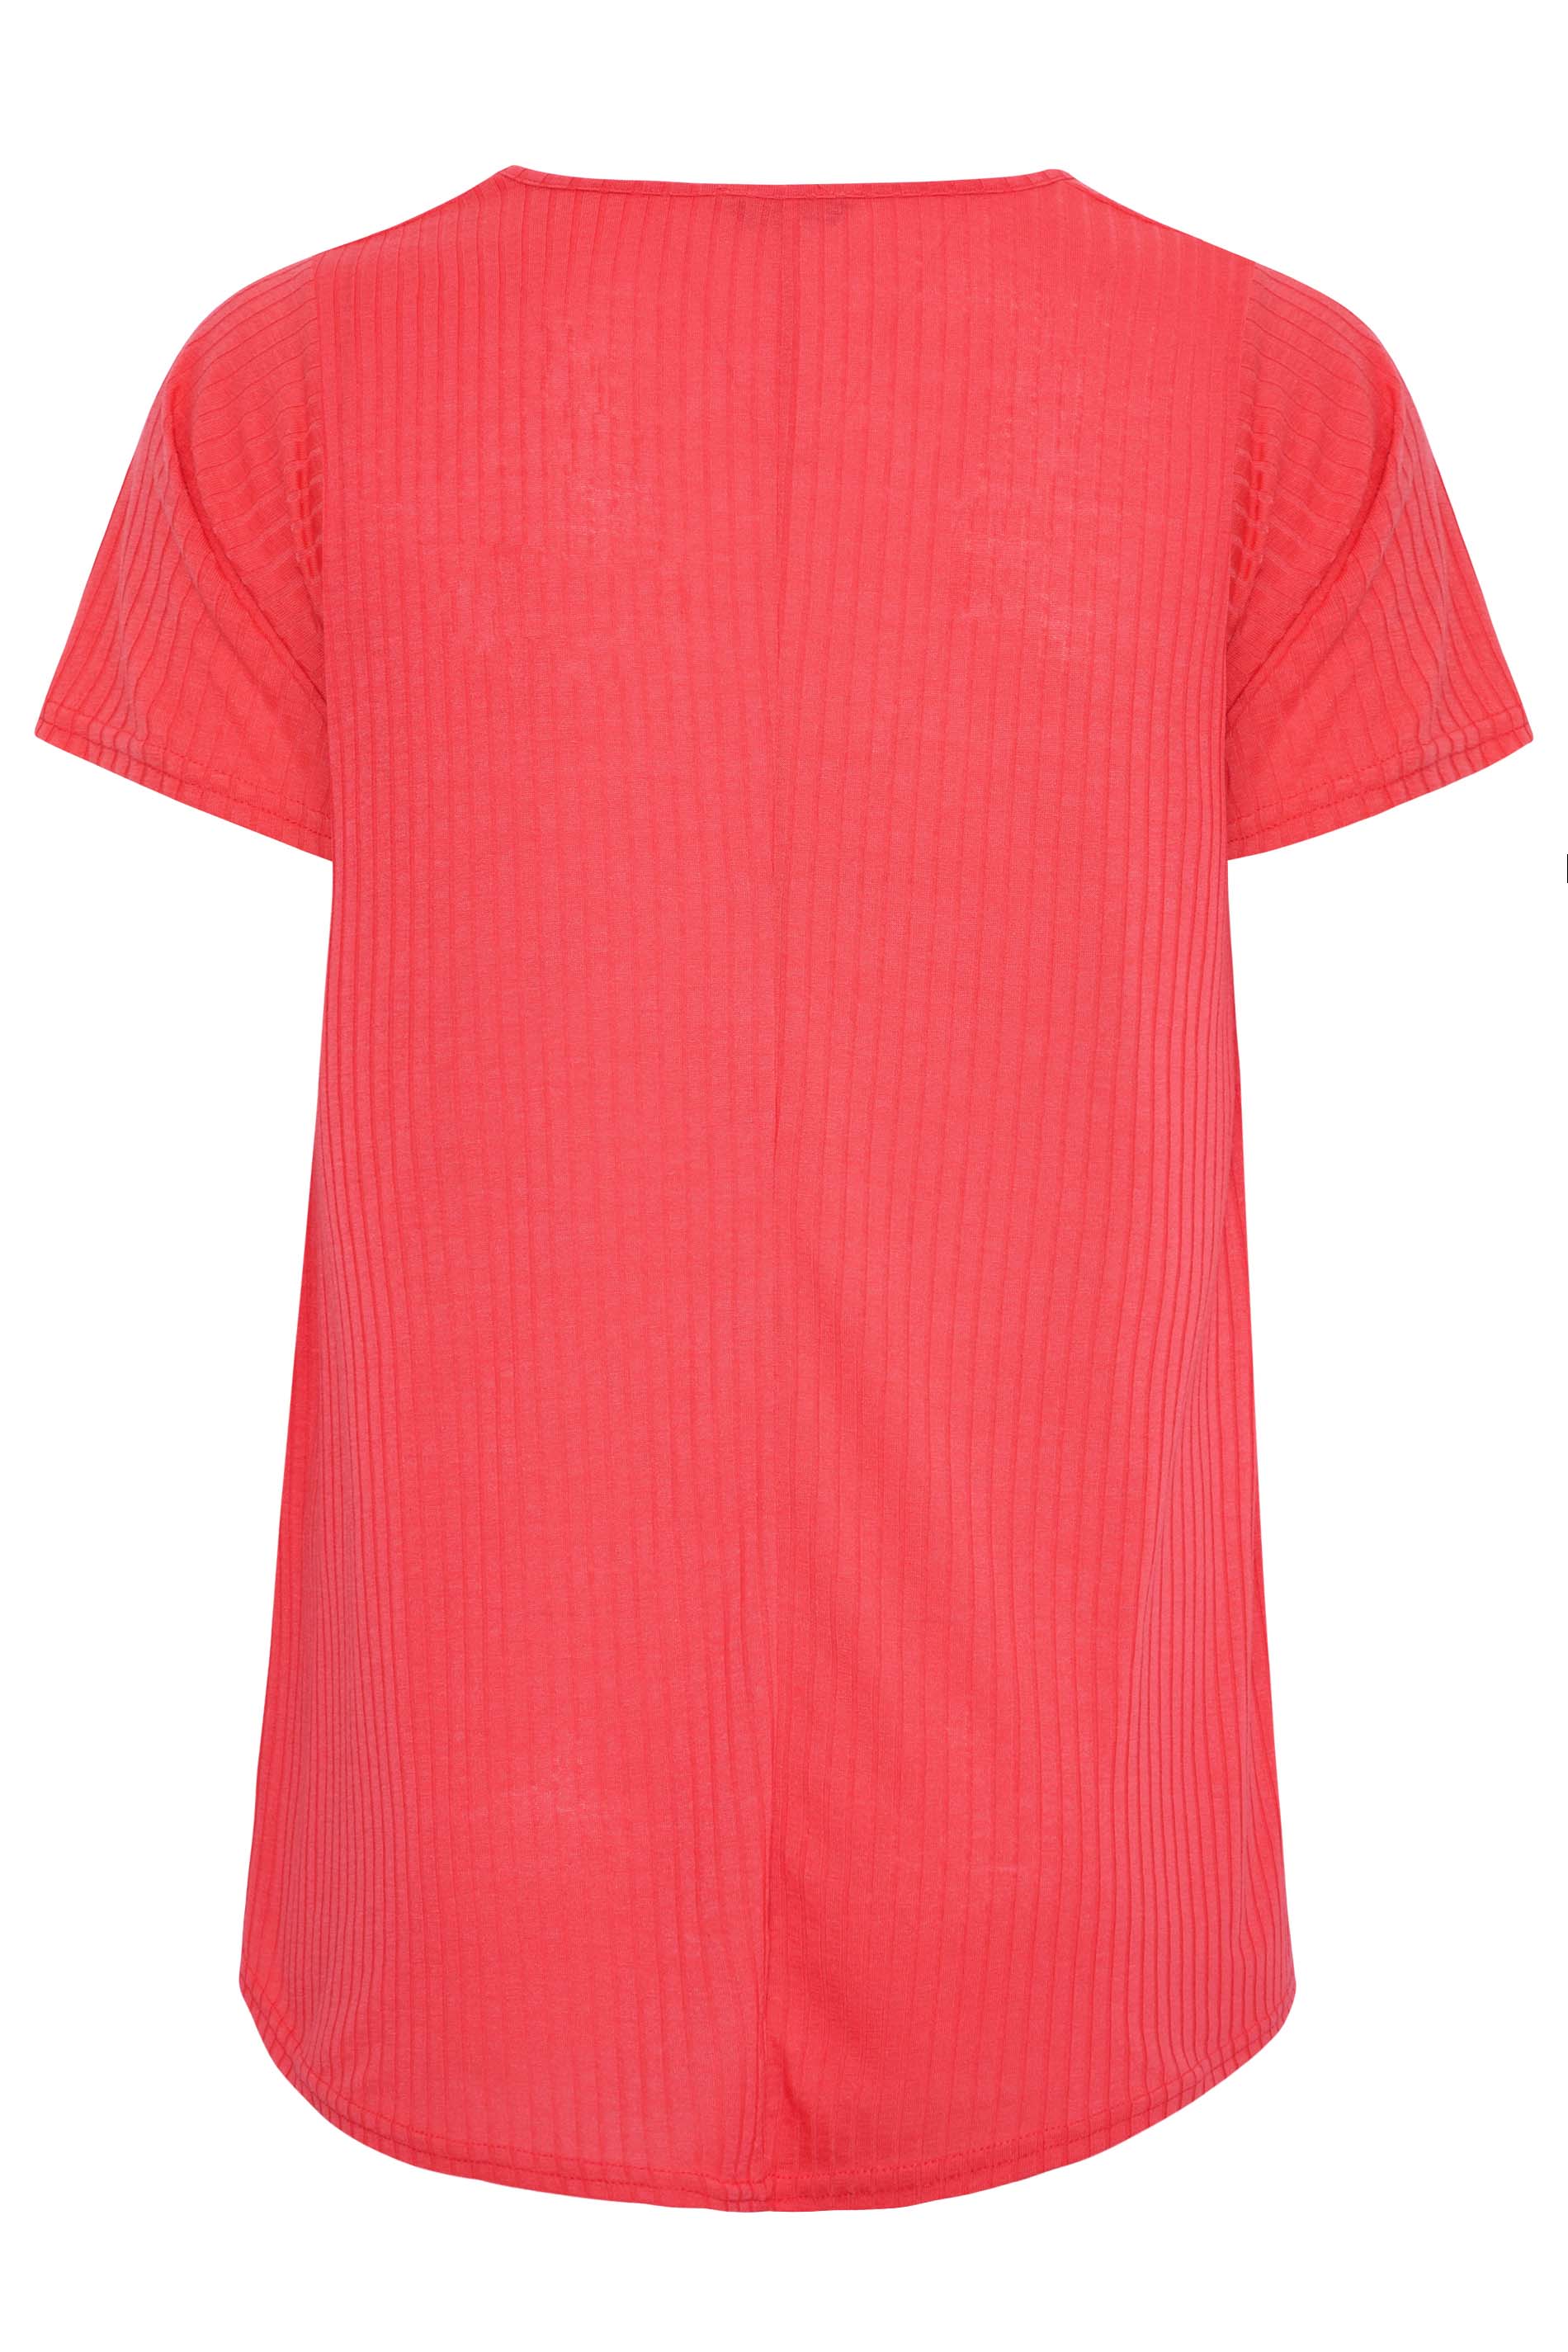 Grande taille  Tops Grande taille  Tops Jersey | LIMITED COLLECTION - T-Shirt Rose Saumon Nervuré Volanté - ER74653